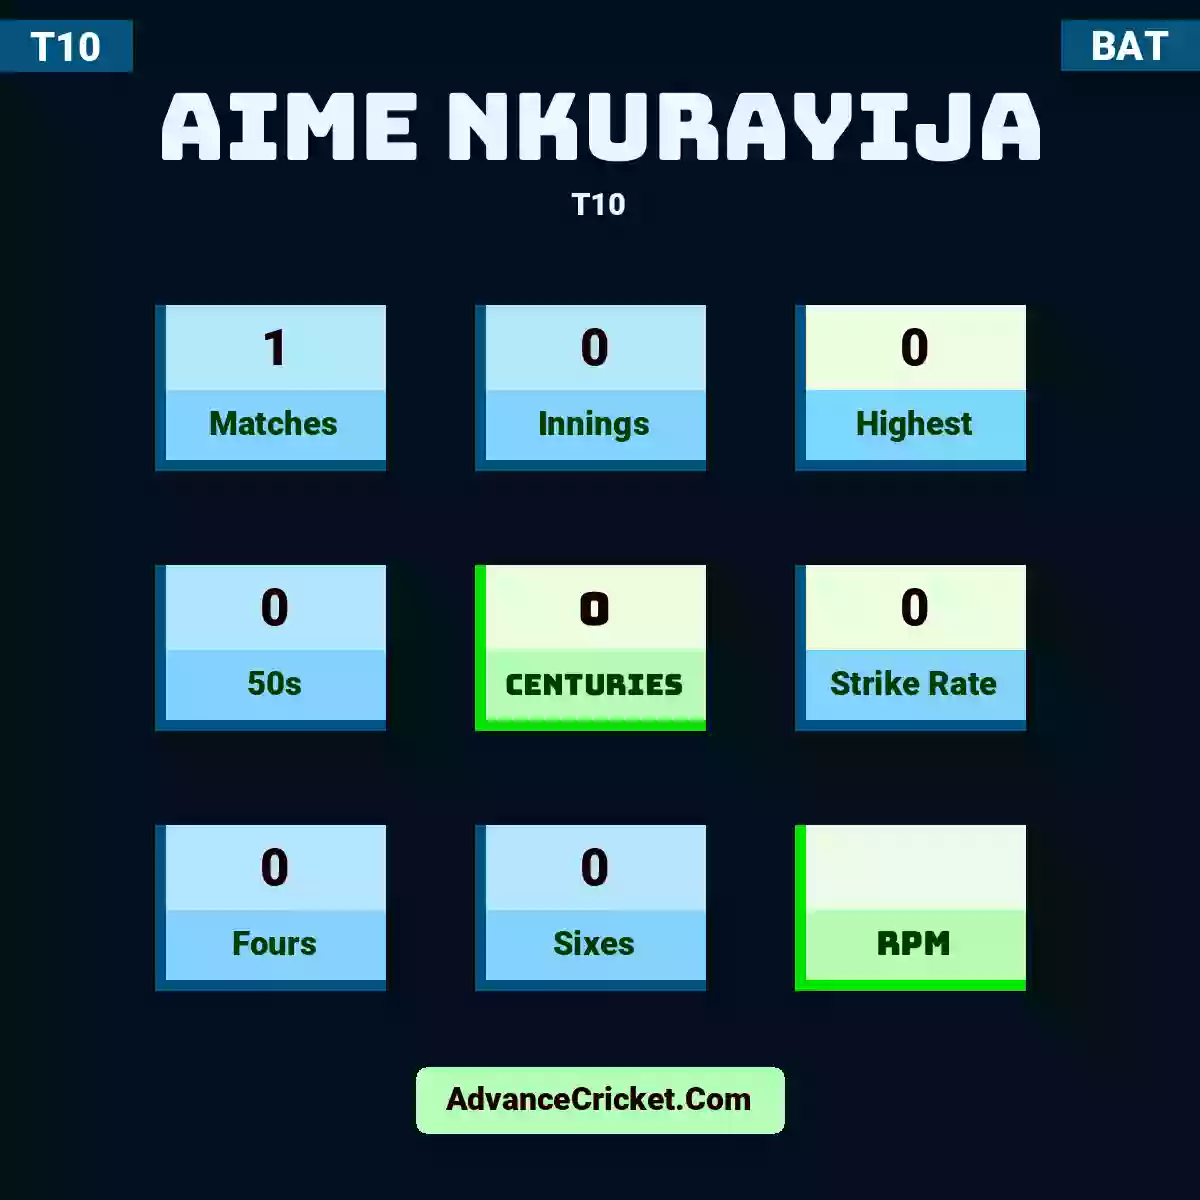 Aime Nkurayija T10 , Aime Nkurayija played 1 matches, scored 0 runs as highest, 0 half-centuries, and 0 centuries, with a strike rate of 0. A.Nkurayija hit 0 fours and 0 sixes.